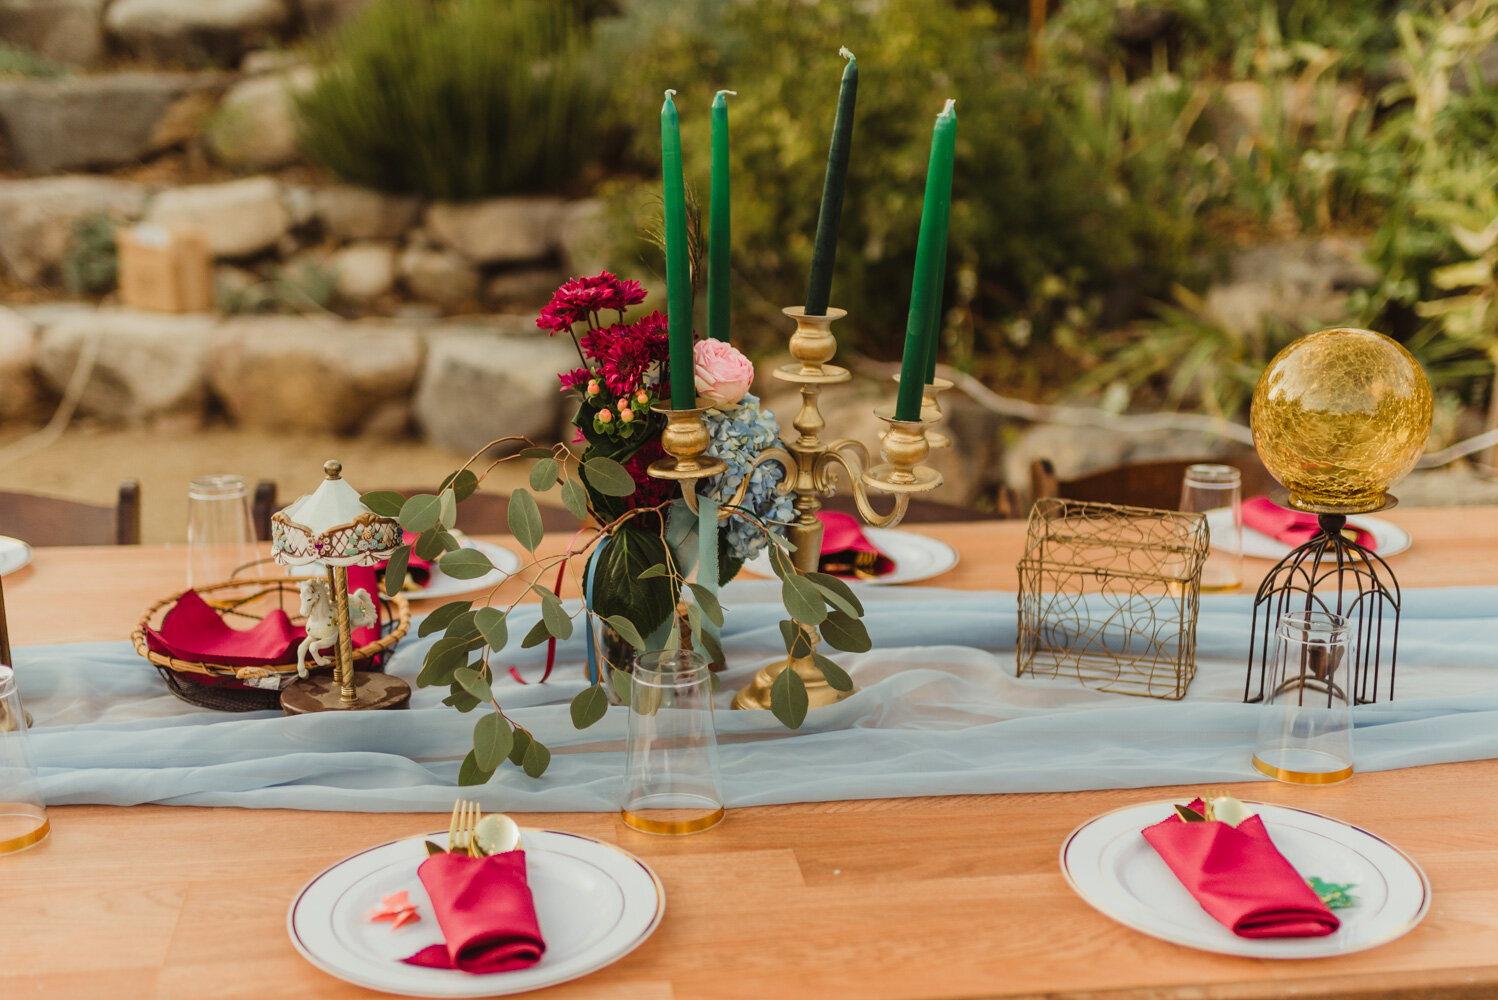 River School Farm Wedding, eclectic themed wedding decor inspiration 